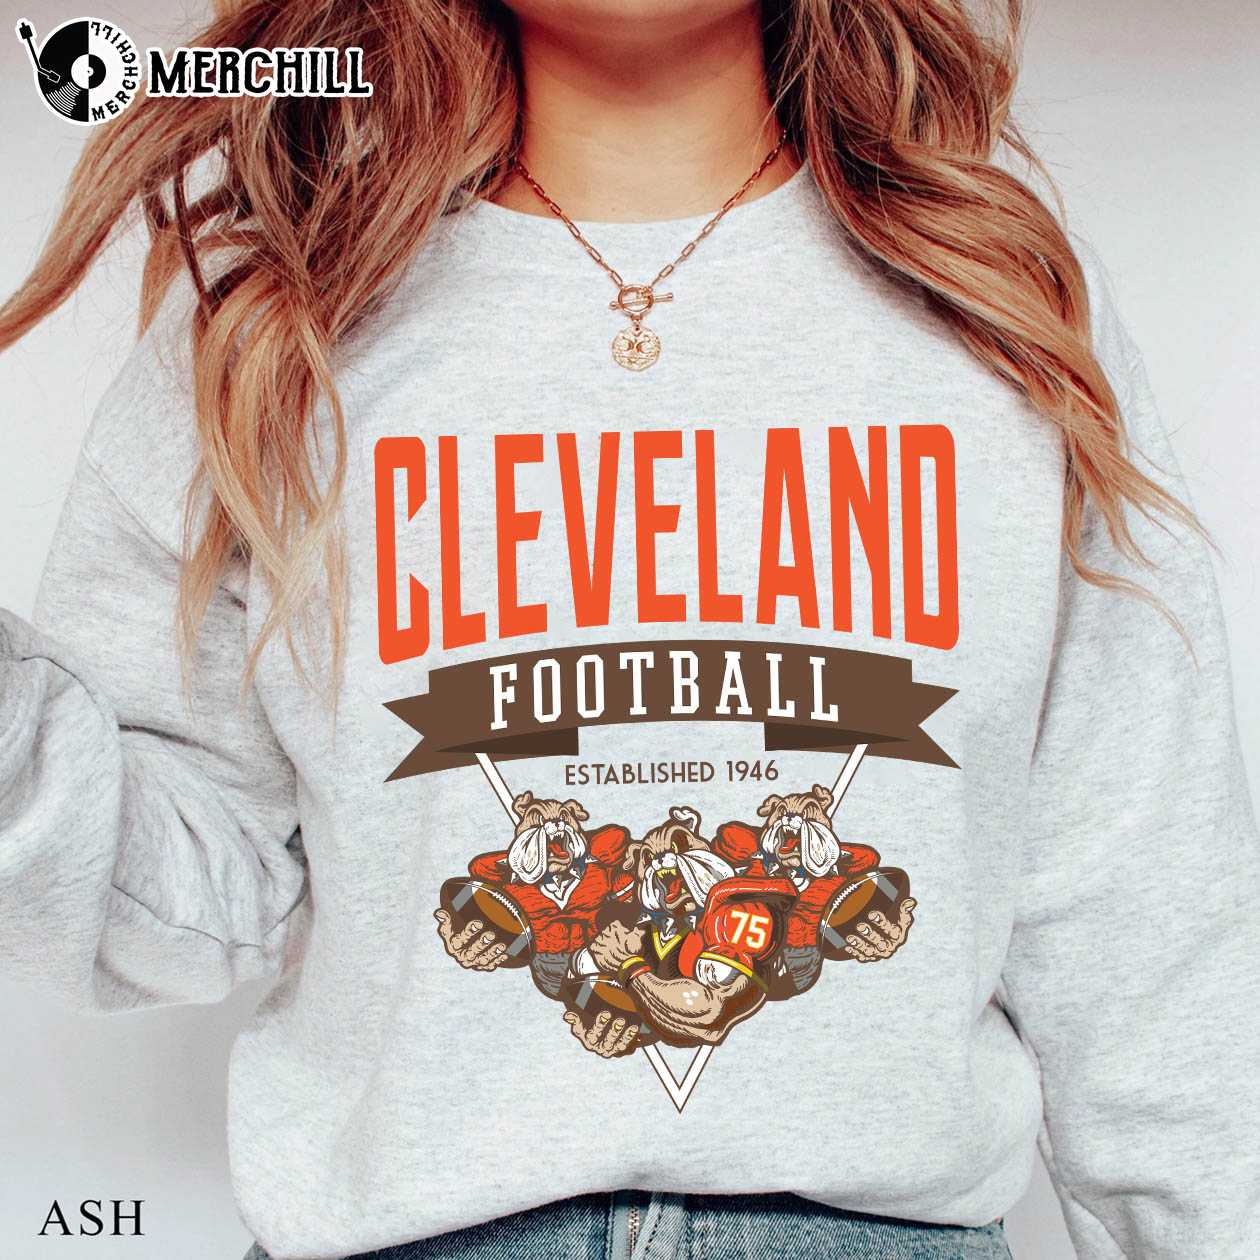 Cleveland Browns Shirt for Men Cleveland Browns Shirt for Women Browns Gifts Funny Browns Tshirt Browns Shirt for Dad Browns Game Day